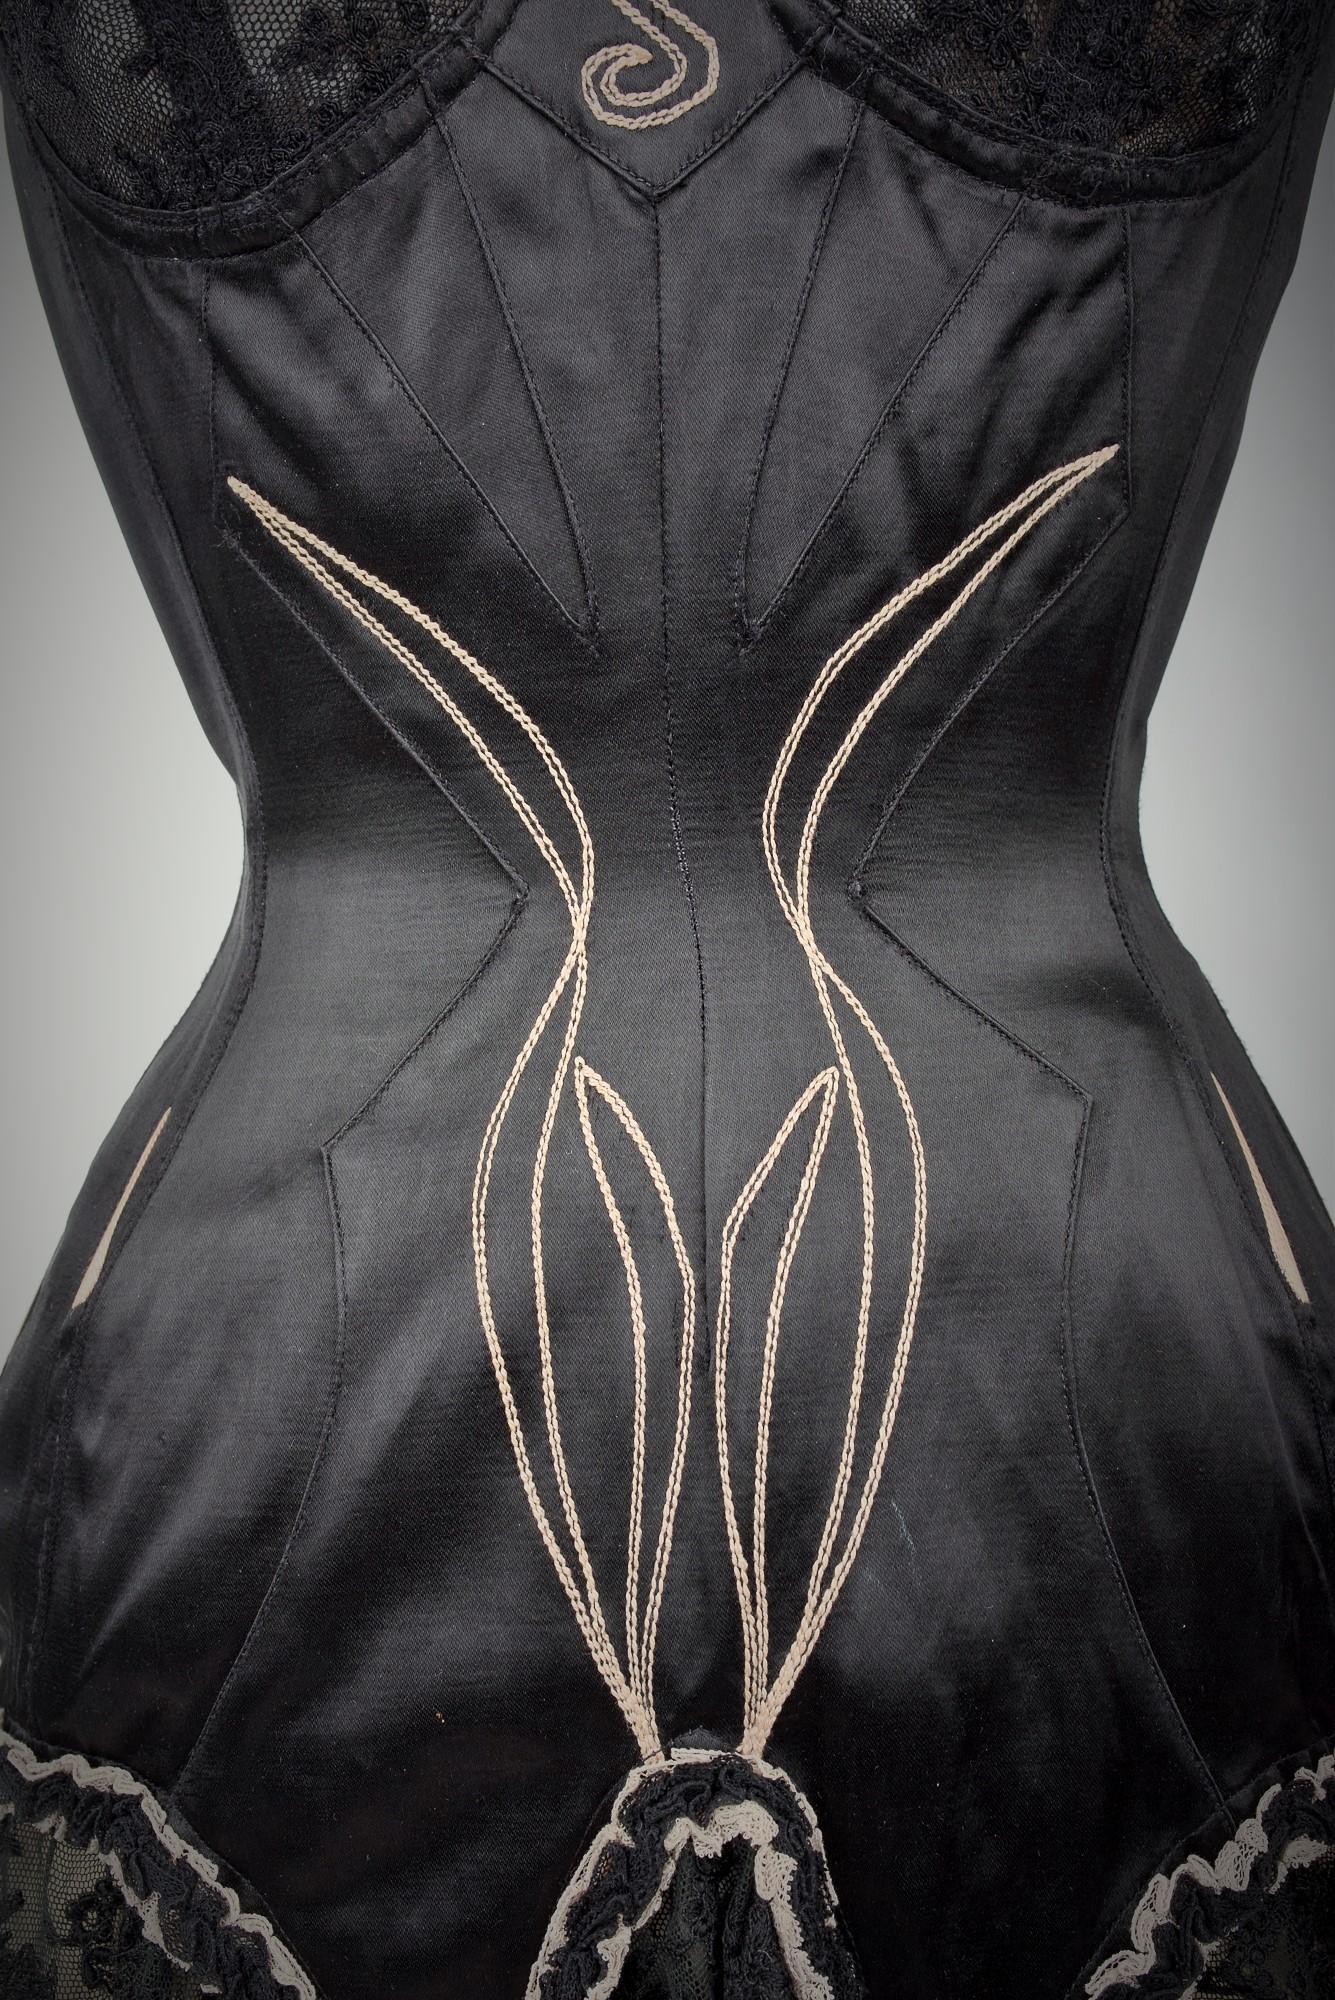 Black Embroidered satin corset for an elegant Parisian woman - France Circa 1930 -1950